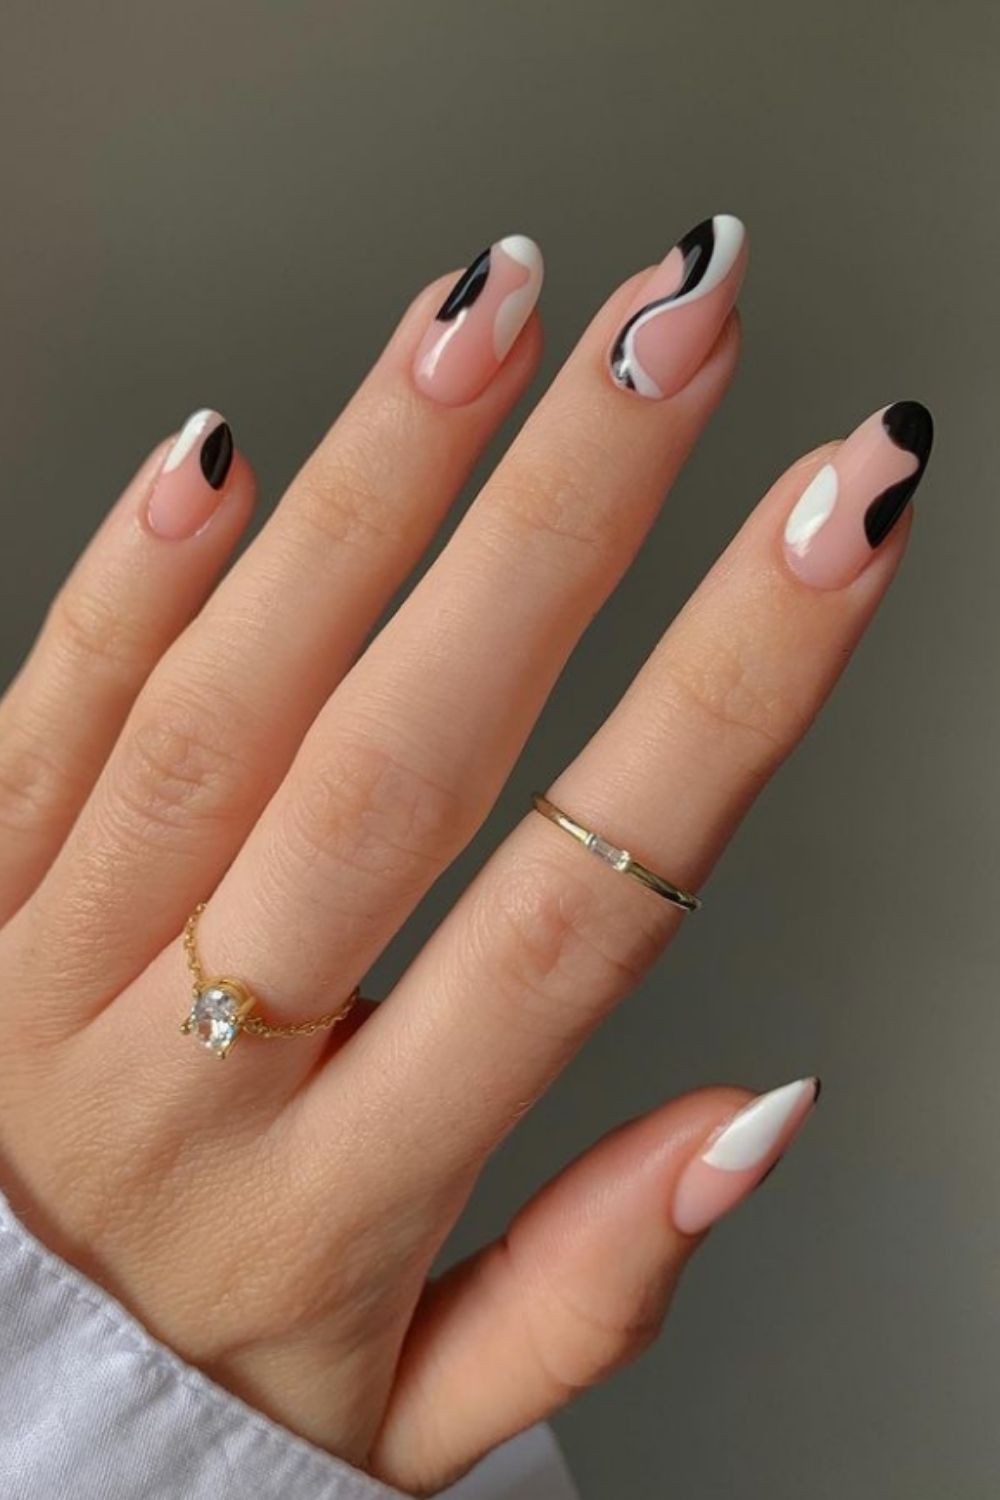 Black and white almond nails design